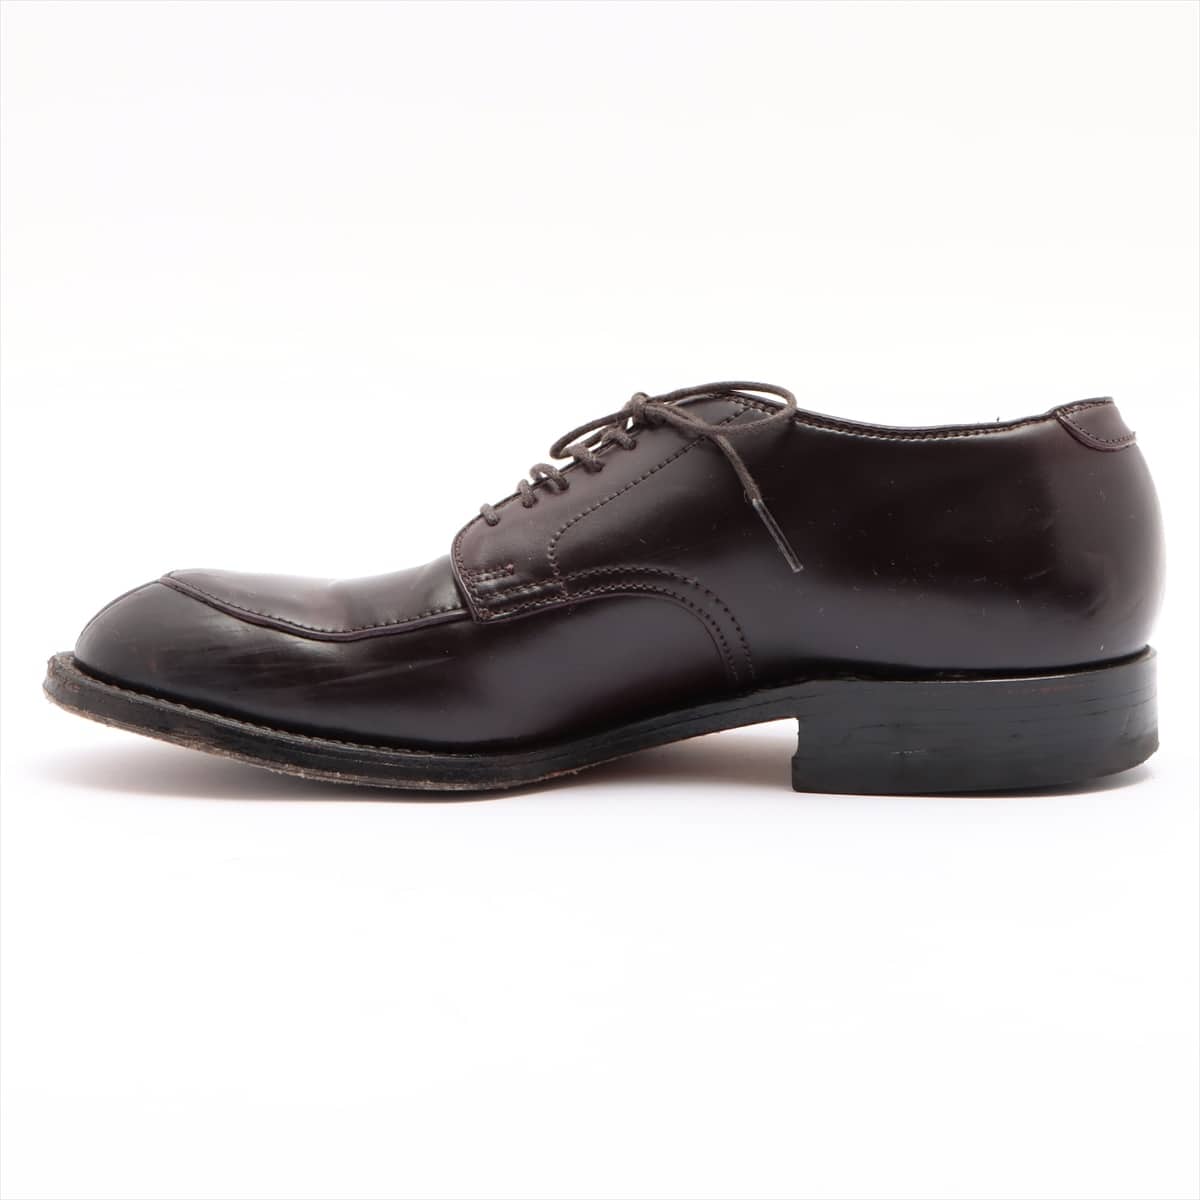 Alden Cordovan Leather shoes 7 1/2 Men's Brown 54321